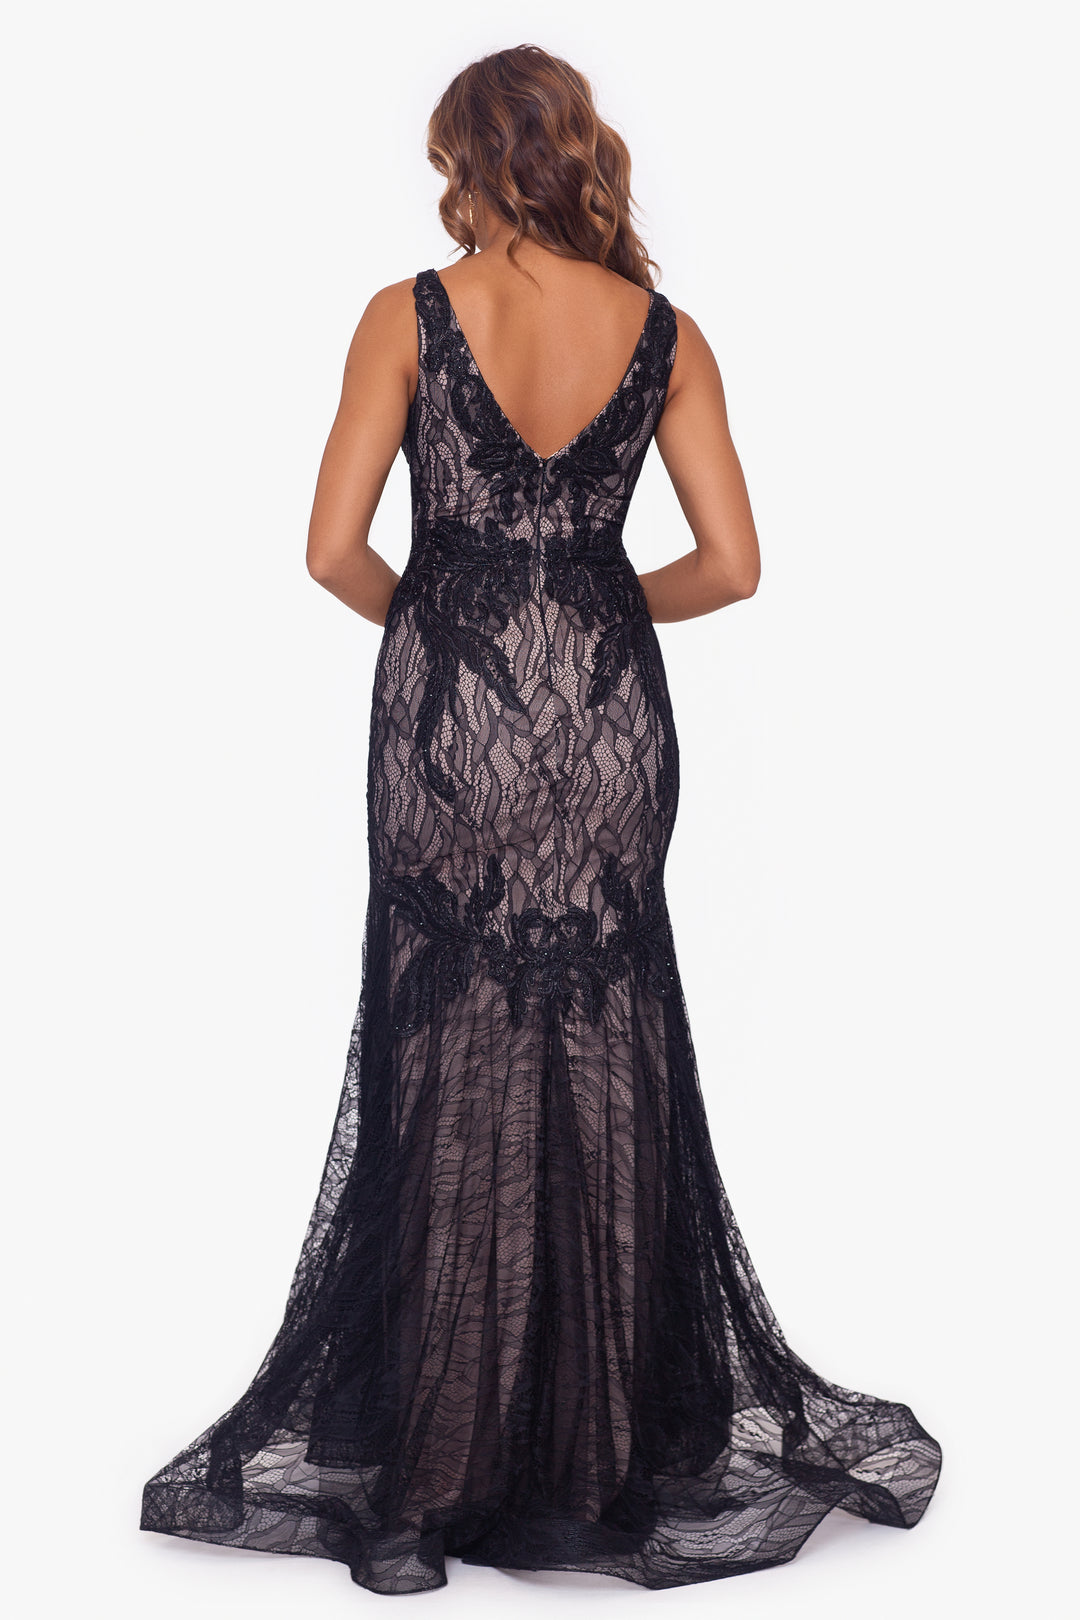 Buy Online Black/Nude Novelty Applique Dress for Women